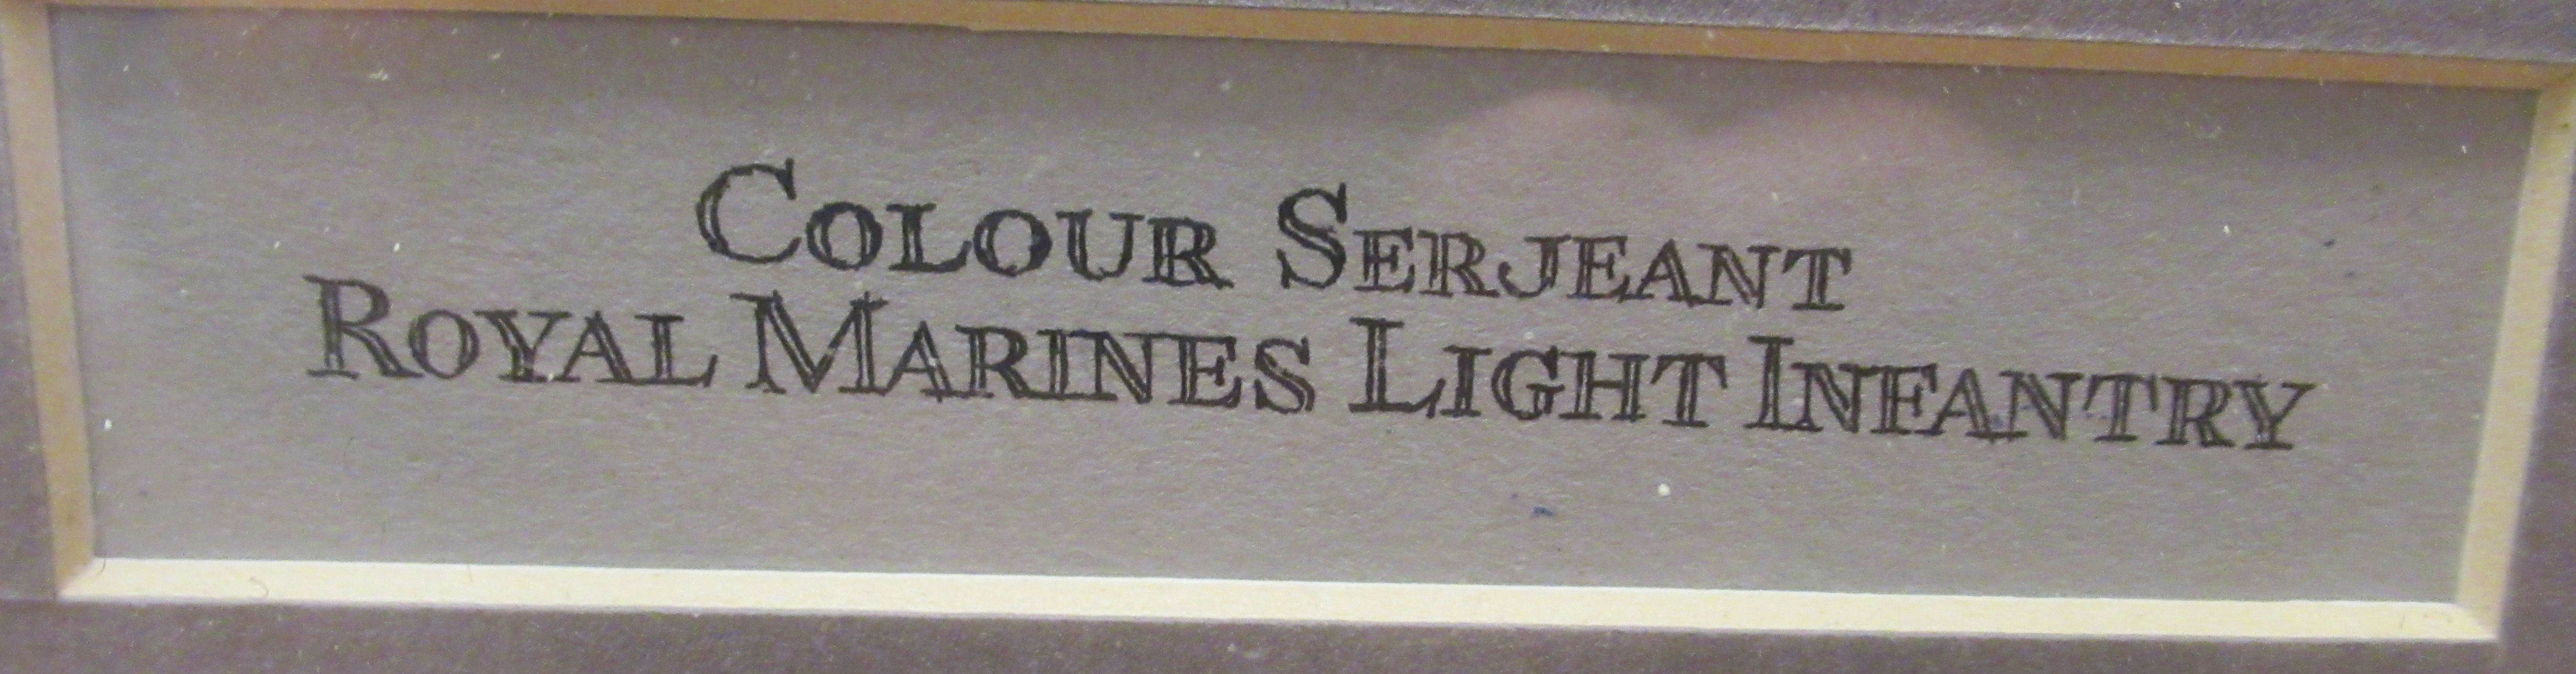 British military braided uniform insignia, viz. Colour Sergeant Royal Marines Light Infantry  ( - Image 4 of 4